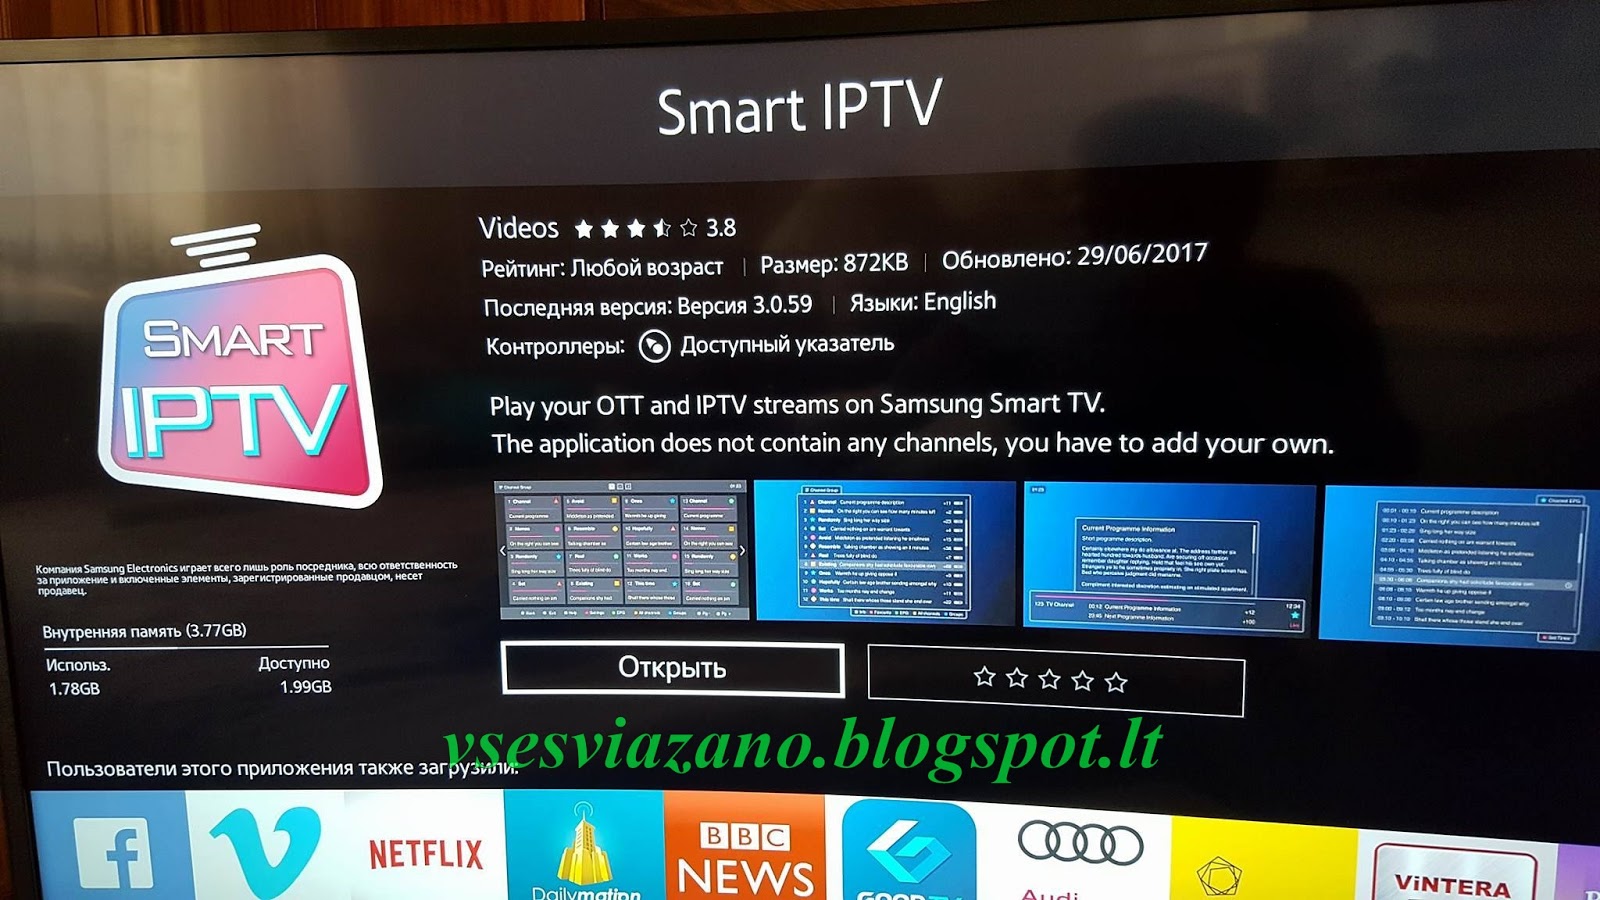 IPTV плеер для телевизора Samsung Smart TV. IPTV channels on Smart TV Samsung Smart. Smart IPTV приложение. IPTV на смарт телевизоре. Смарт самсунг бесплатные каналы